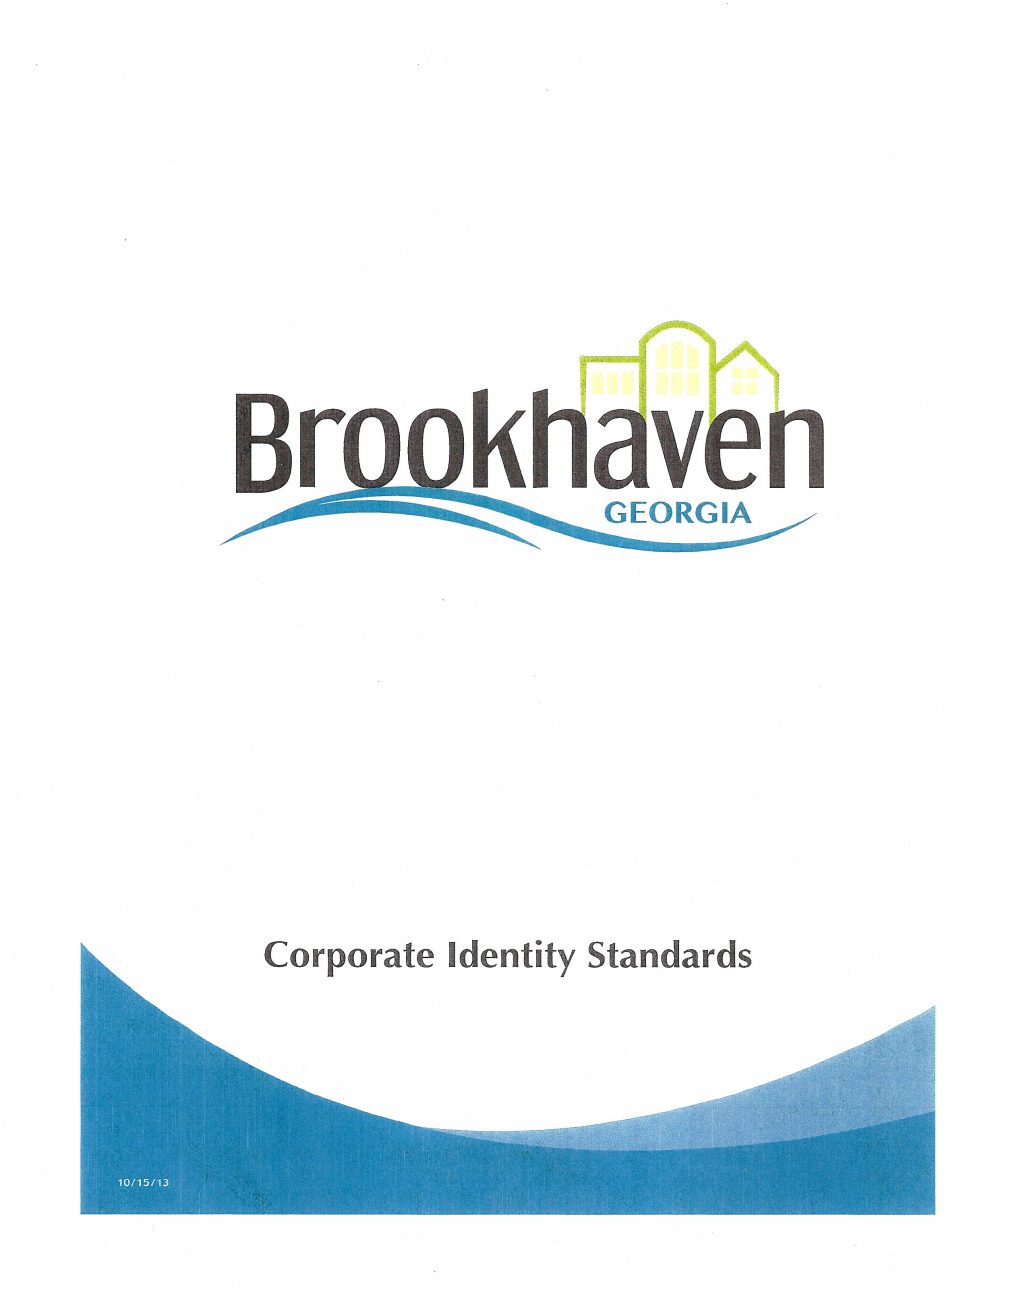 Corporate Identity Standards ~&Ii::;~ Khavengeorgia